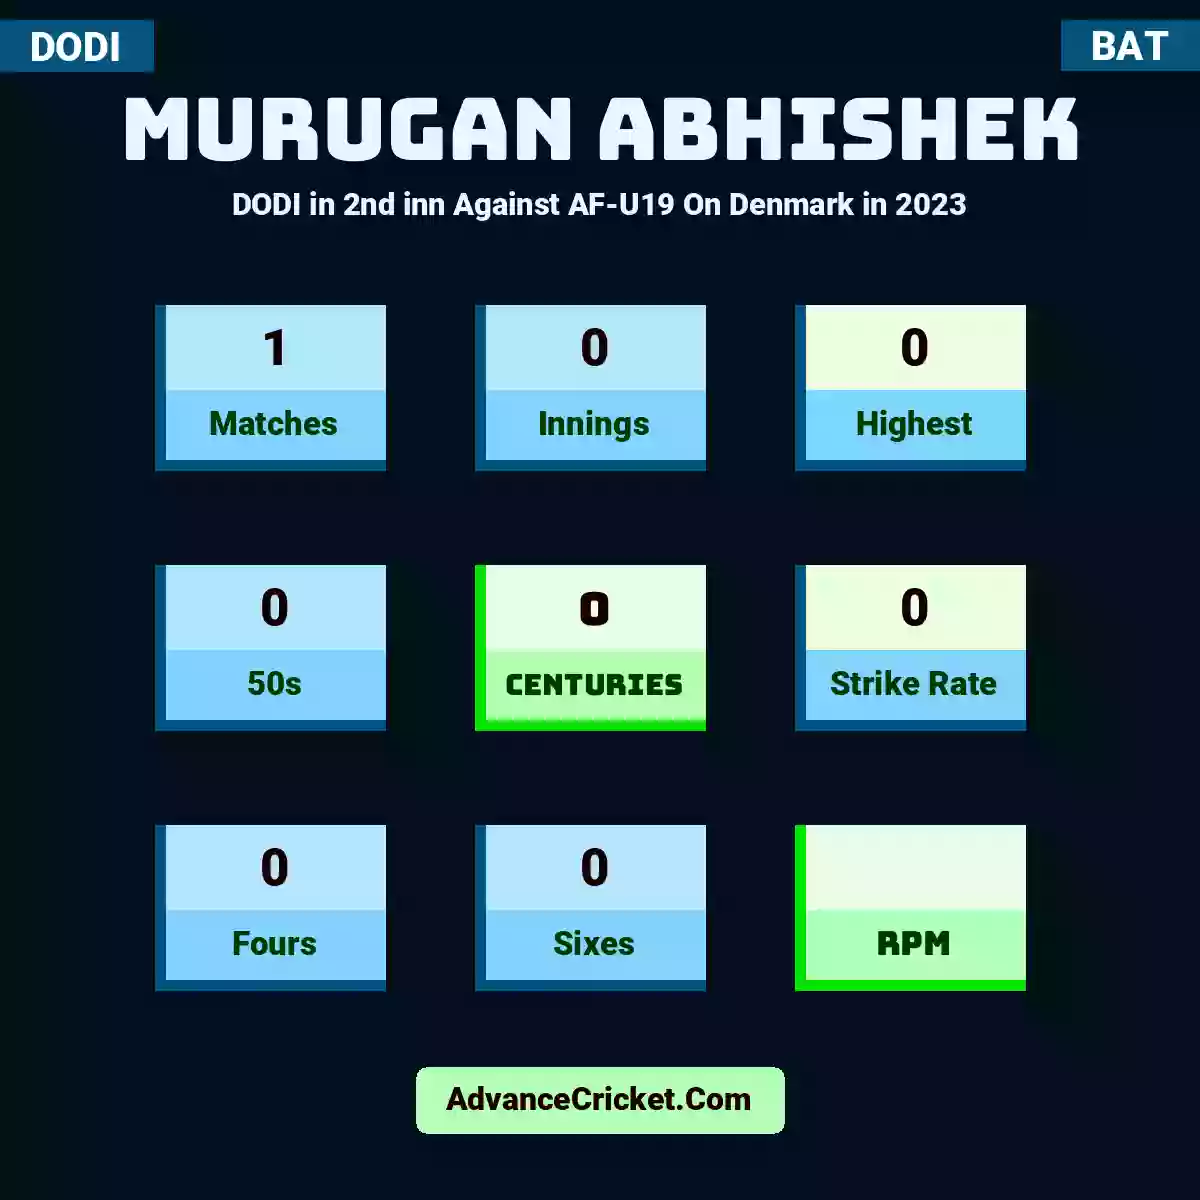 Murugan Abhishek DODI  in 2nd inn Against AF-U19 On Denmark in 2023, Murugan Abhishek played 1 matches, scored 0 runs as highest, 0 half-centuries, and 0 centuries, with a strike rate of 0. M.Abhishek hit 0 fours and 0 sixes.